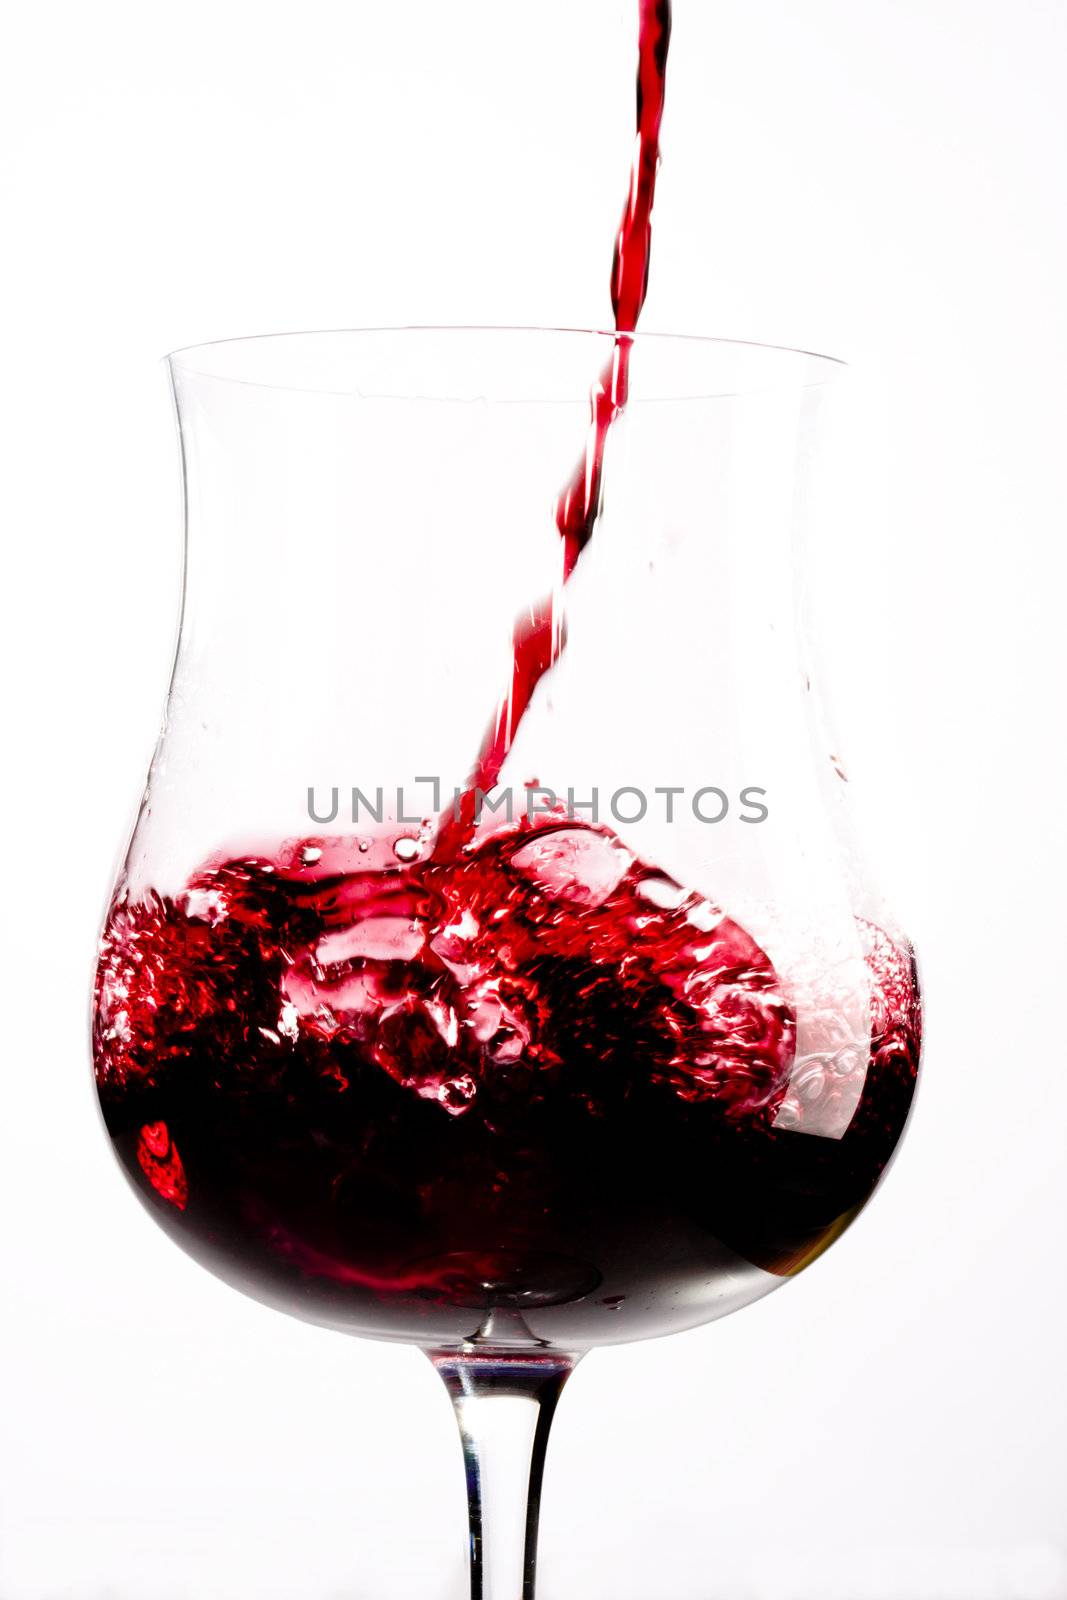 red wine splashing in a glass by bernjuer